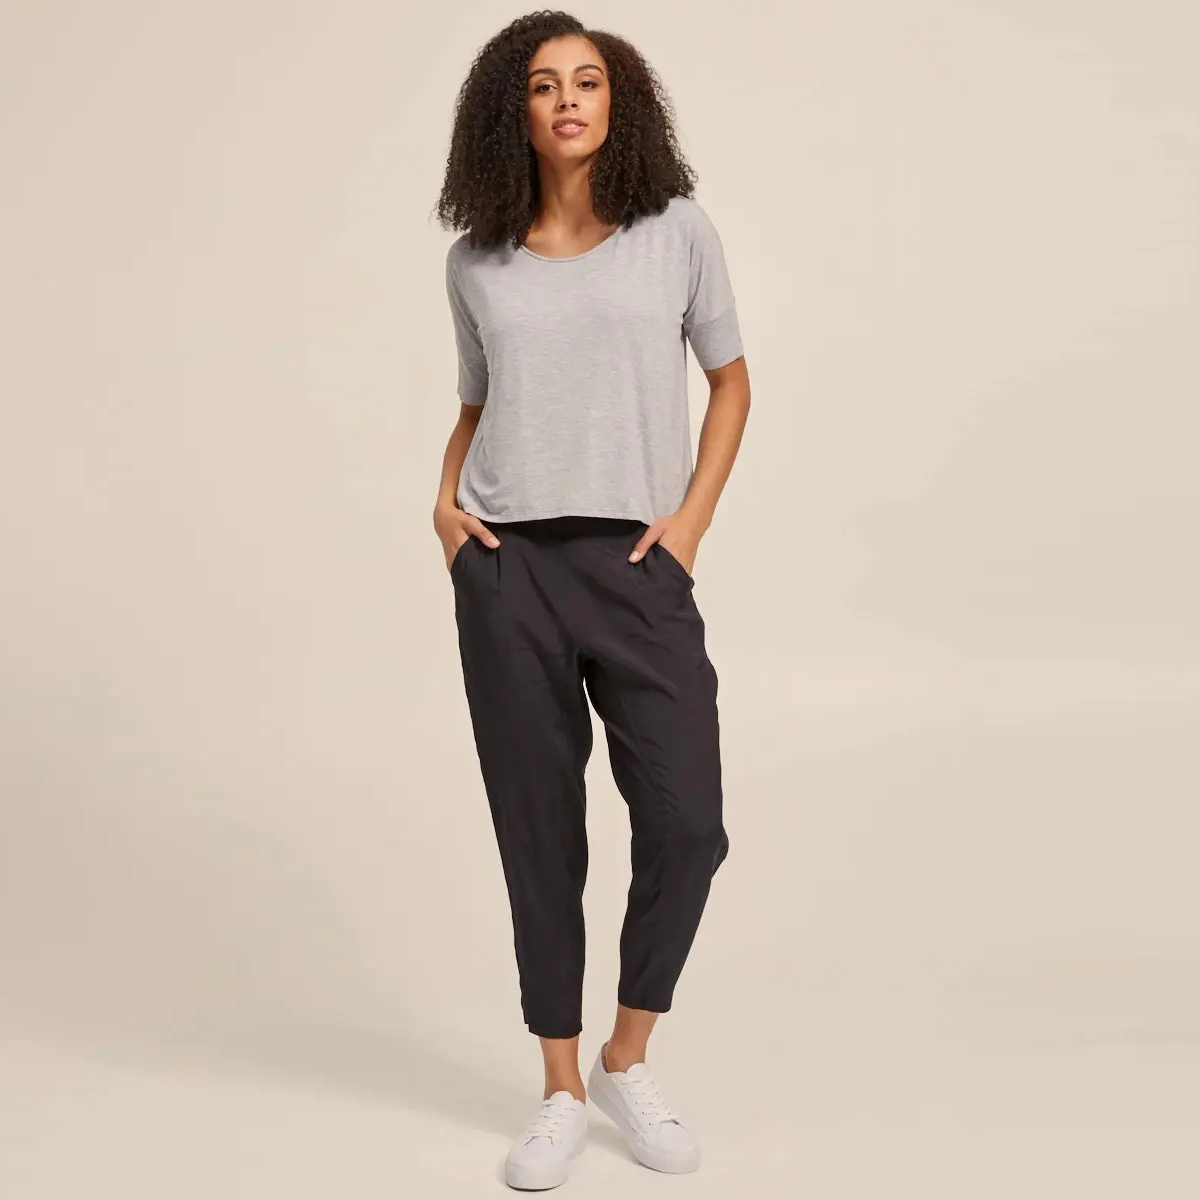 PriceList for Pants Outfit - Black Legging Pants Ladies Casual – Auschalink